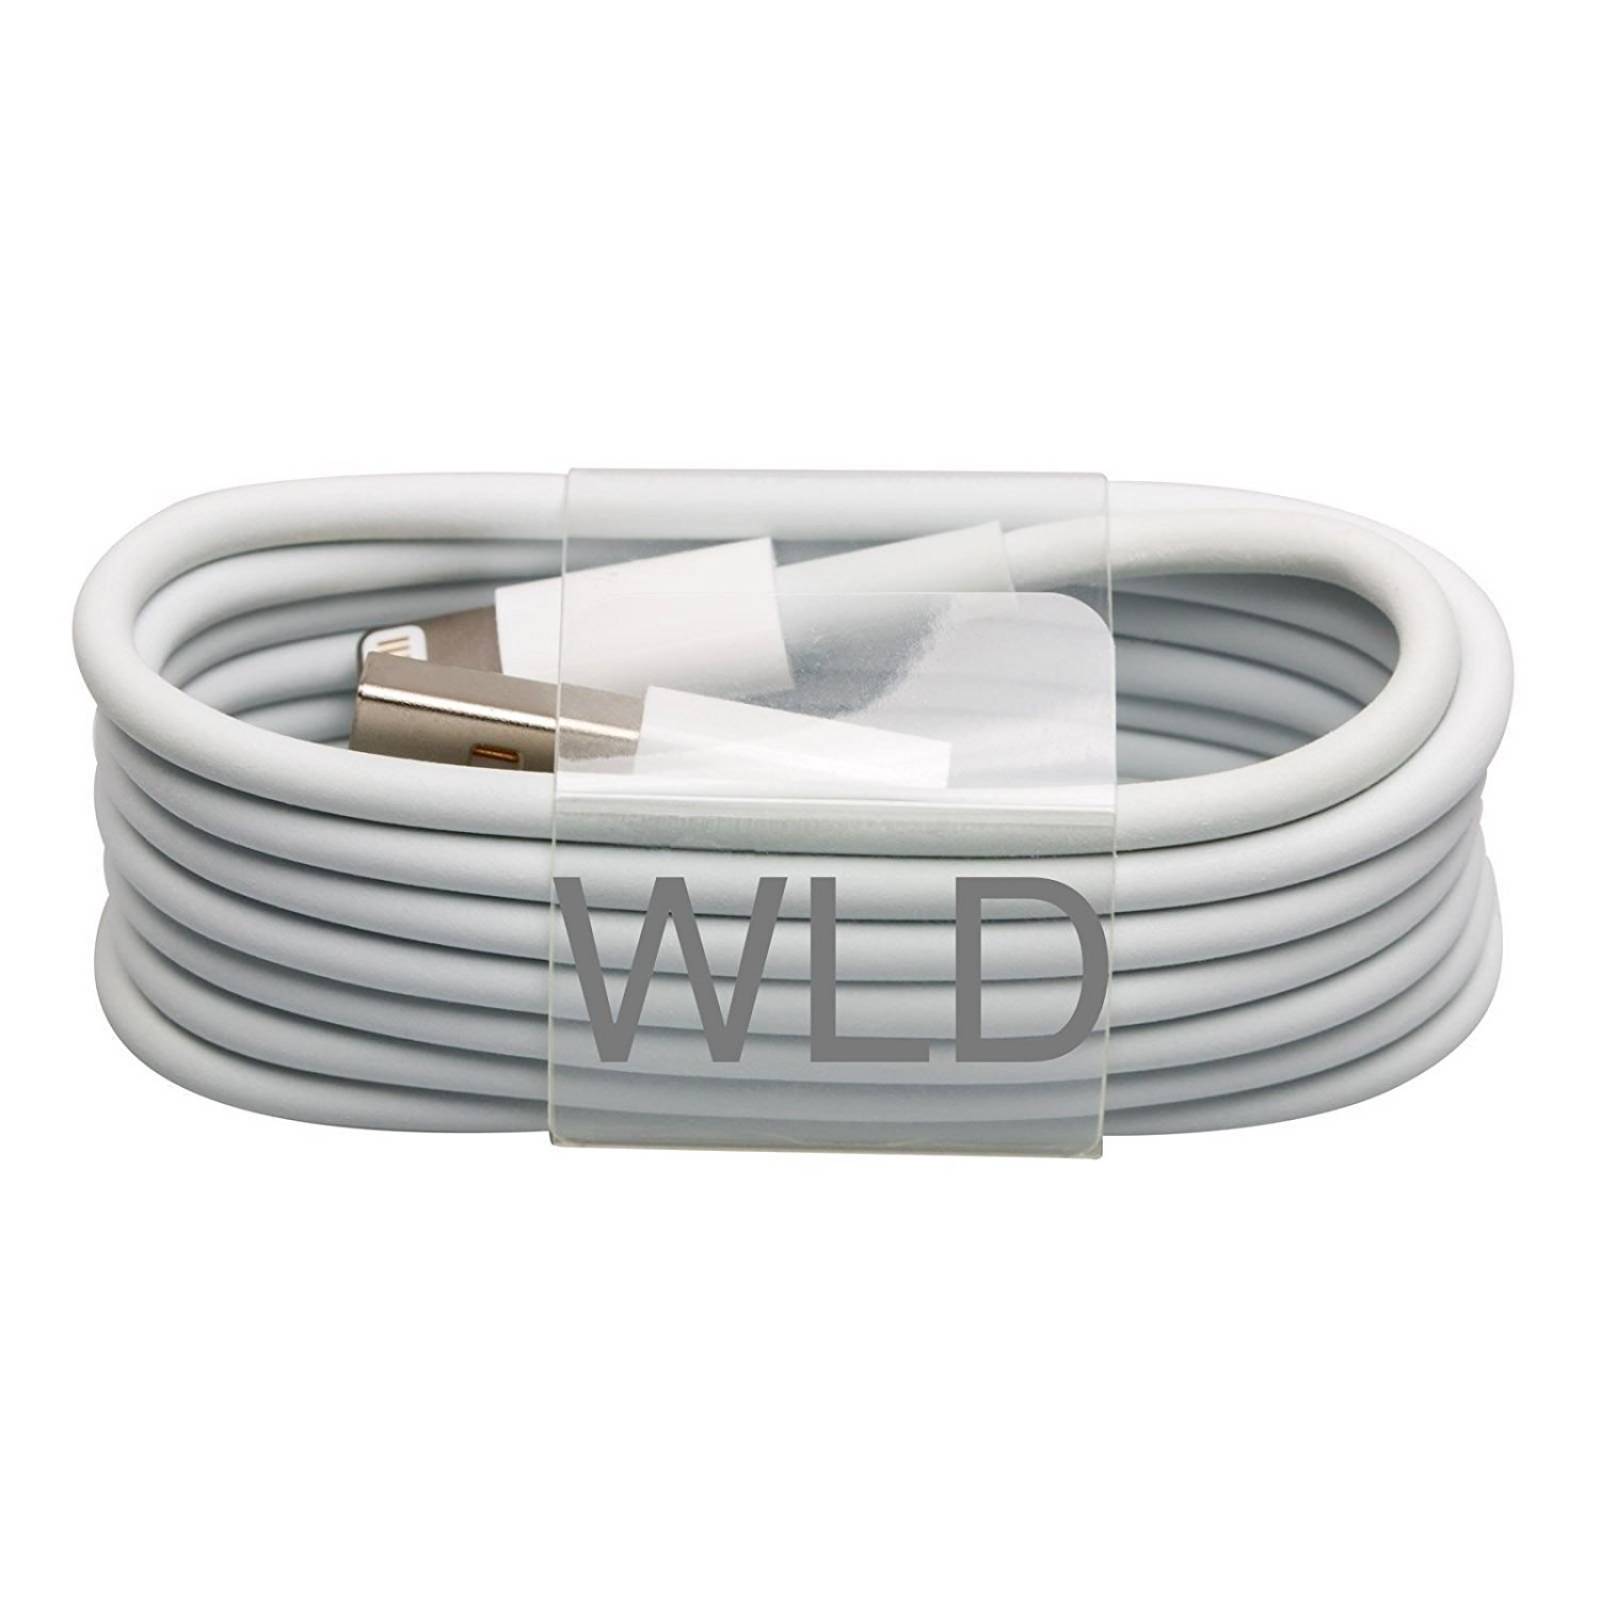 WLD Original OEM Lightning iPhone cargador Lightning Cable 3